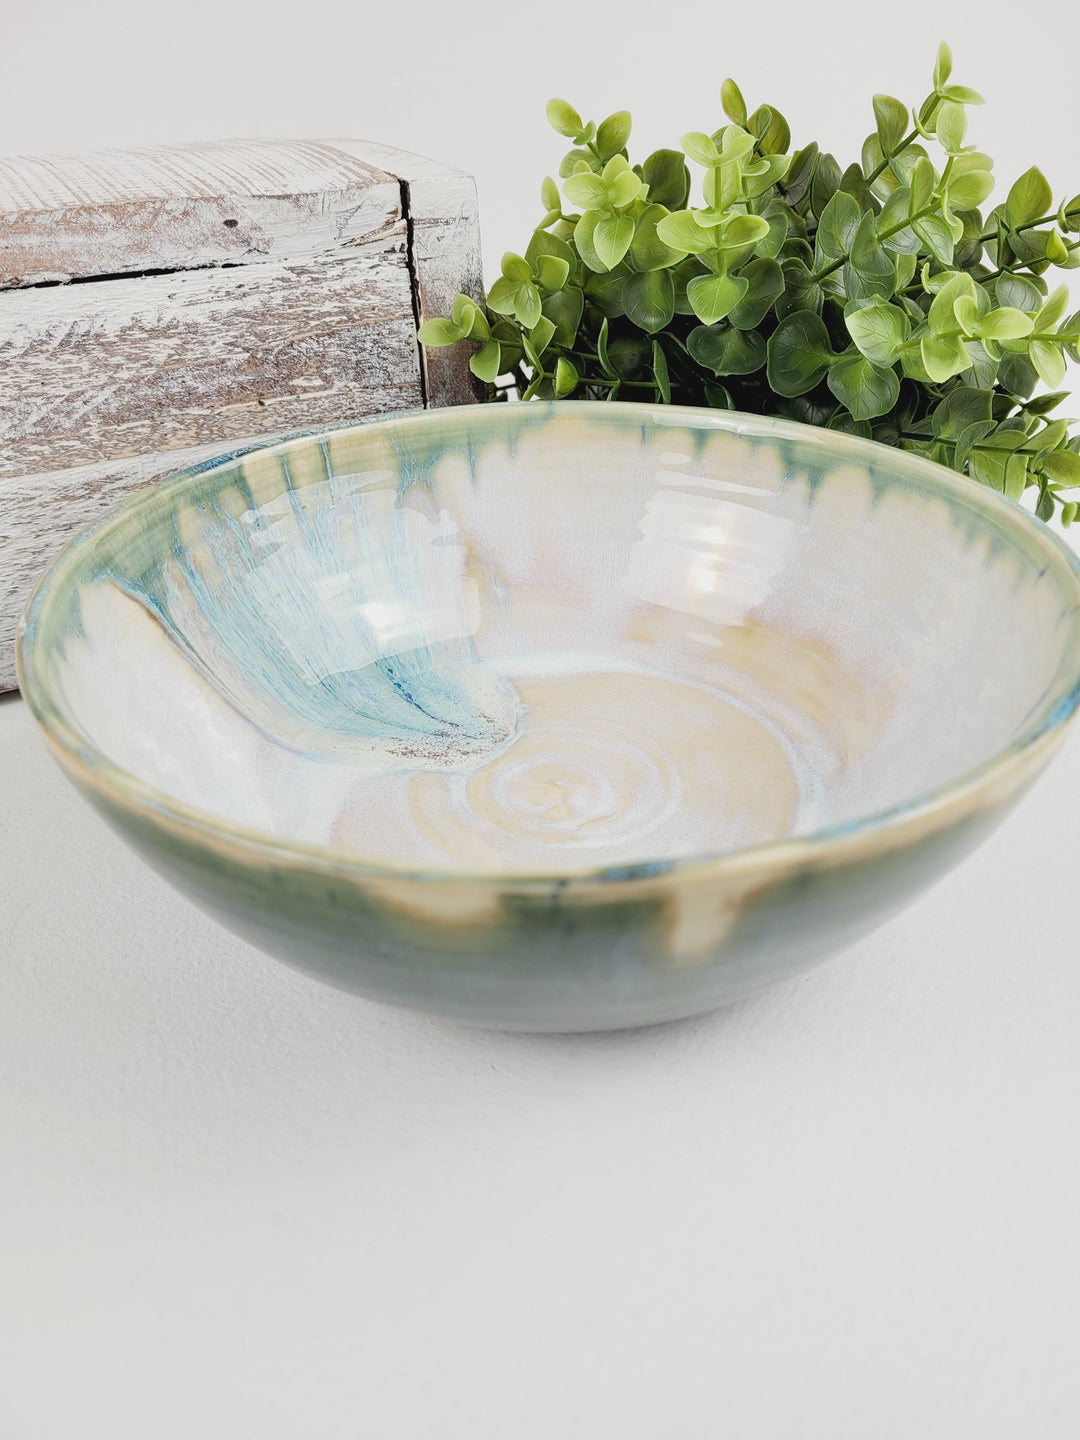 Pottymouth Ceramics, Handmade Ceramic Bowls & Serving Dishes